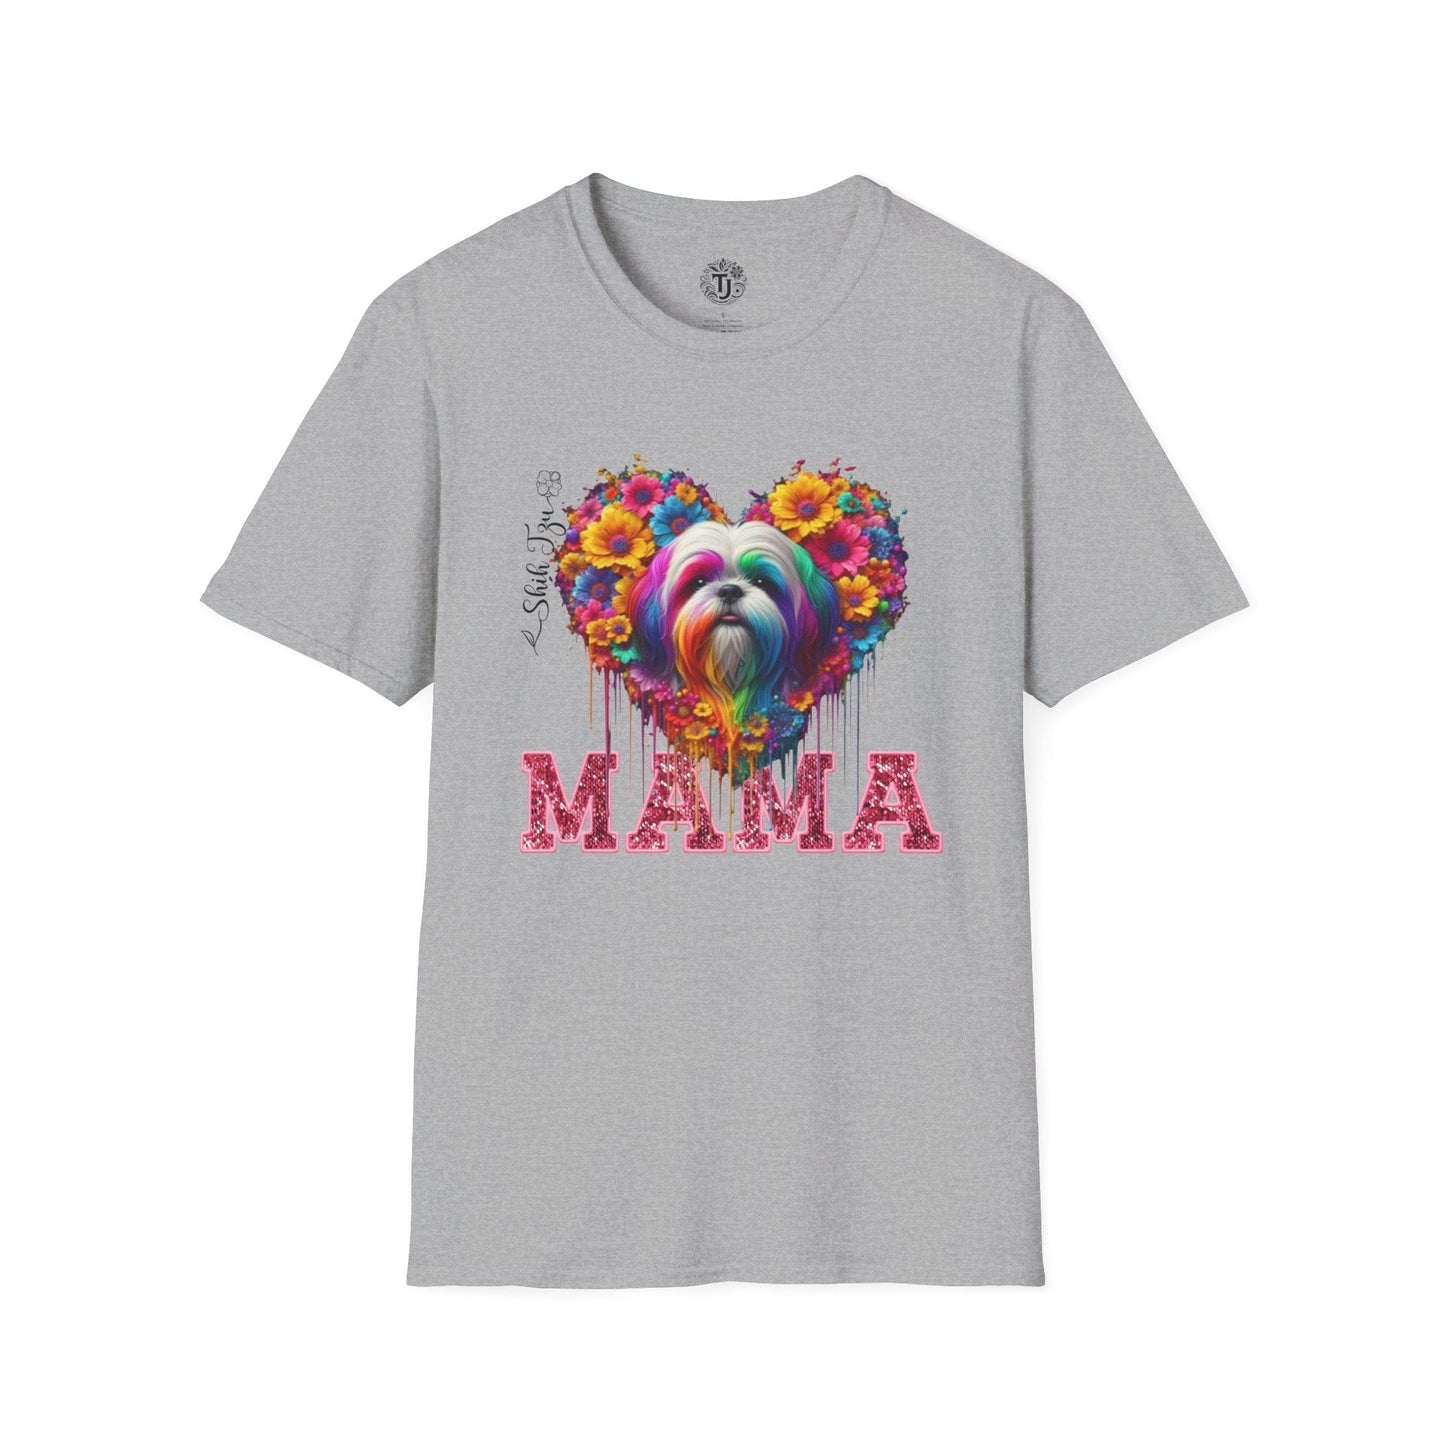 dog-mom-t-shirt-womens-clothing-t-shirt-printing-graphic-t